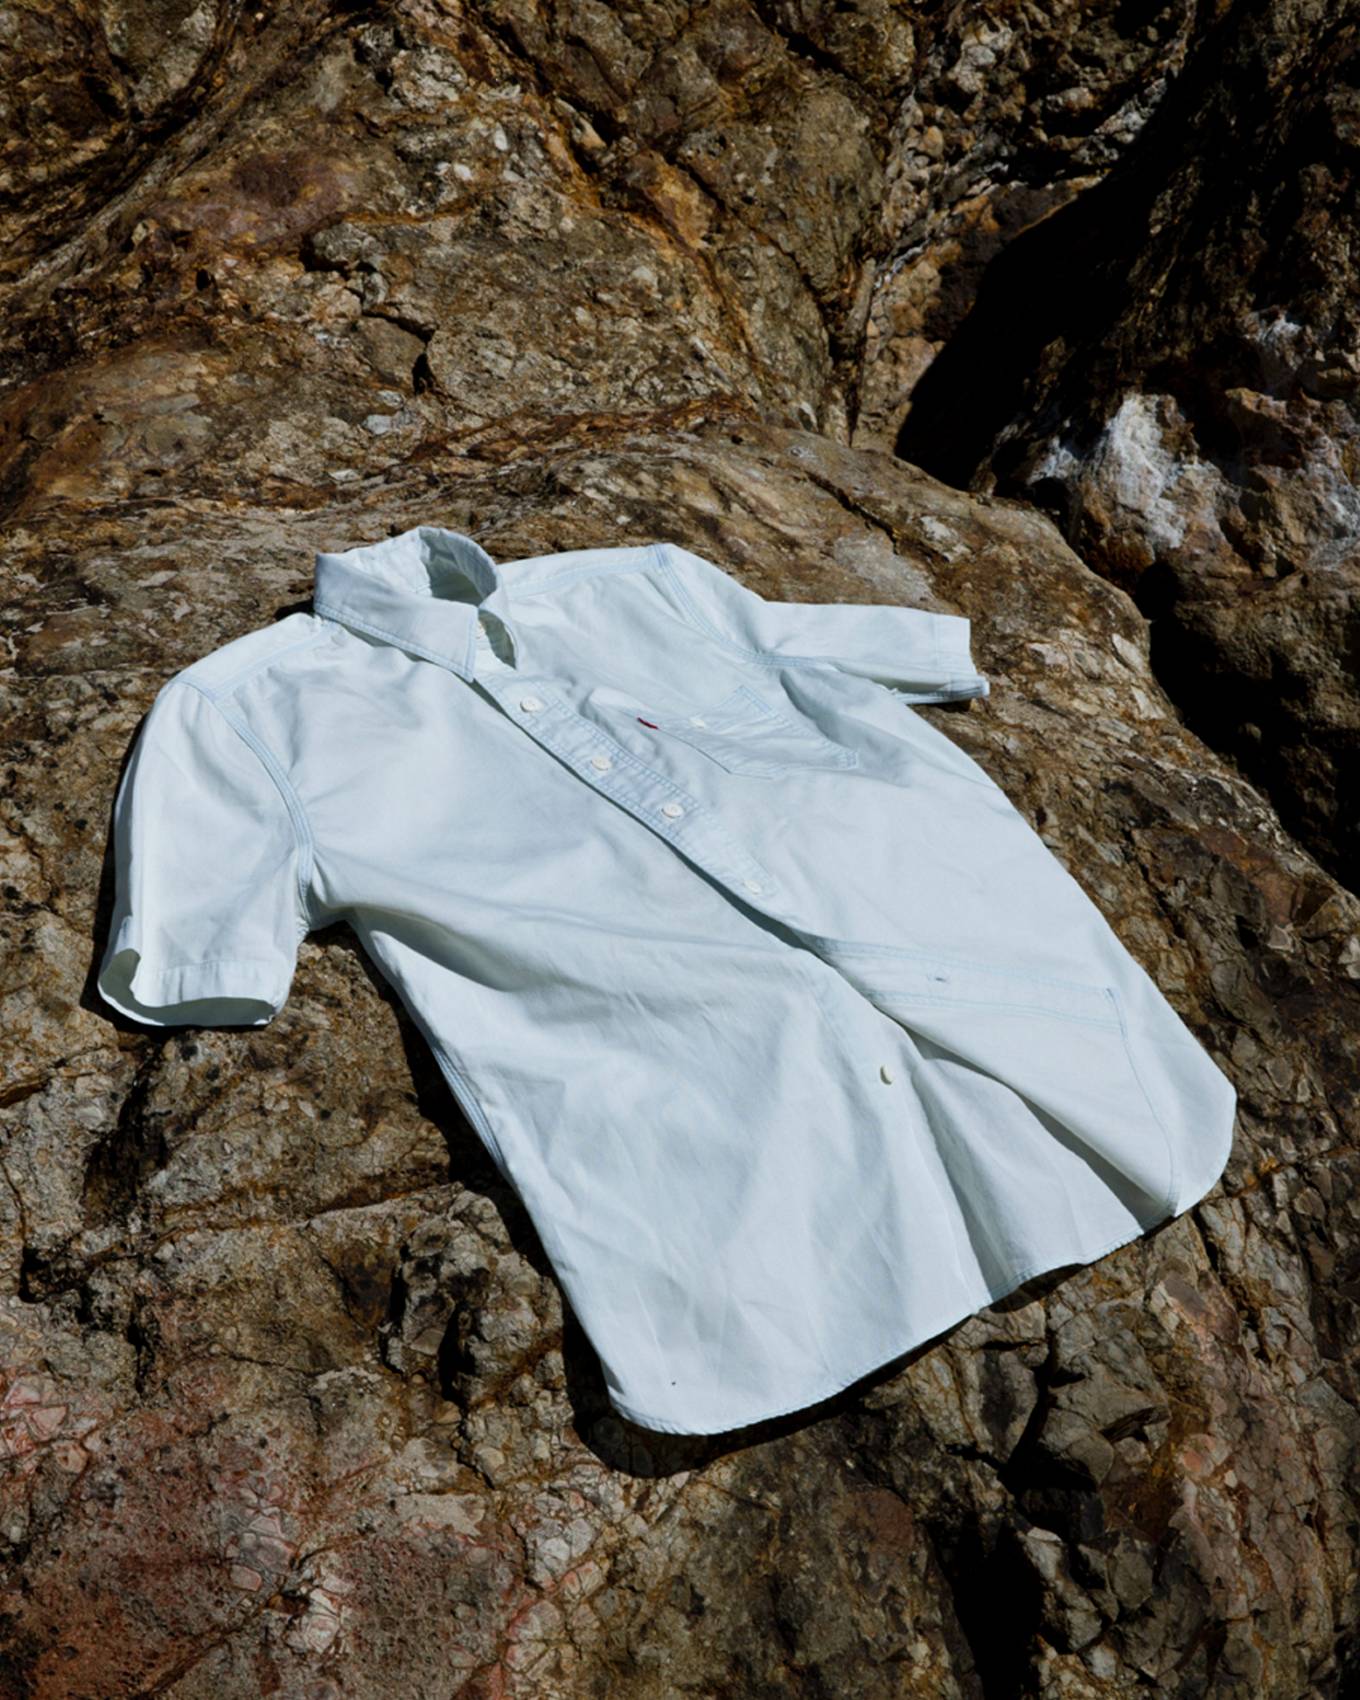 White shirt hanging on a rock.